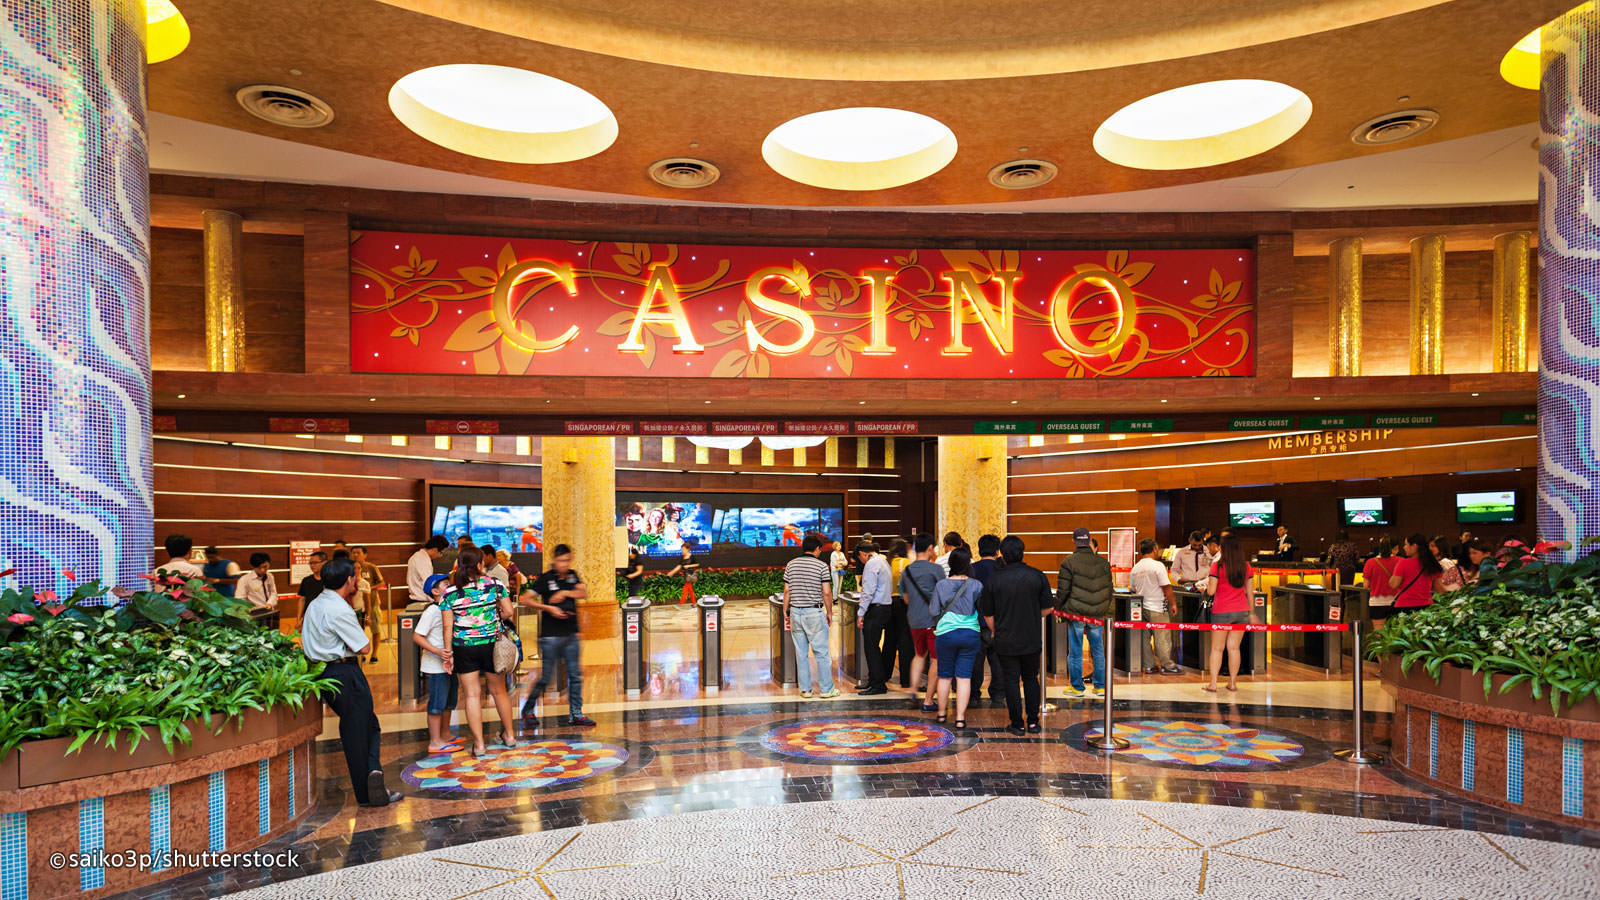 brand new online casinos usa